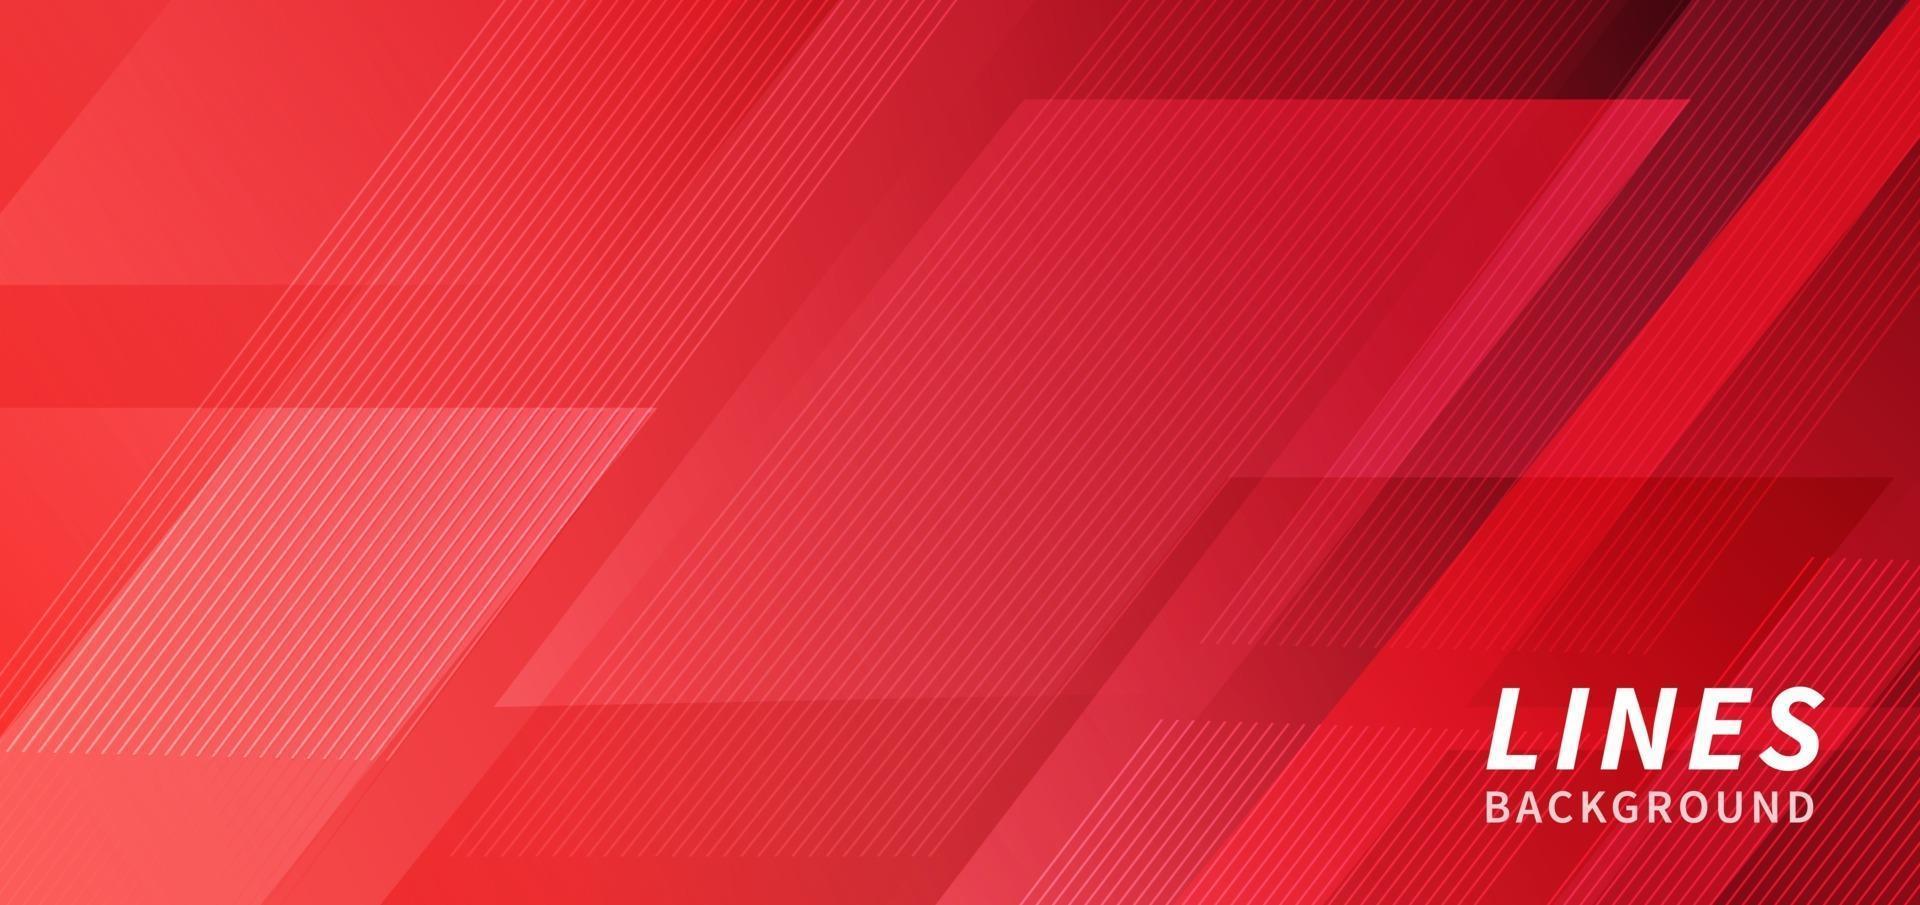 rode abstracte tech geometrische moderne streep lijn achtergrond moderne achtergrond sjabloon vector